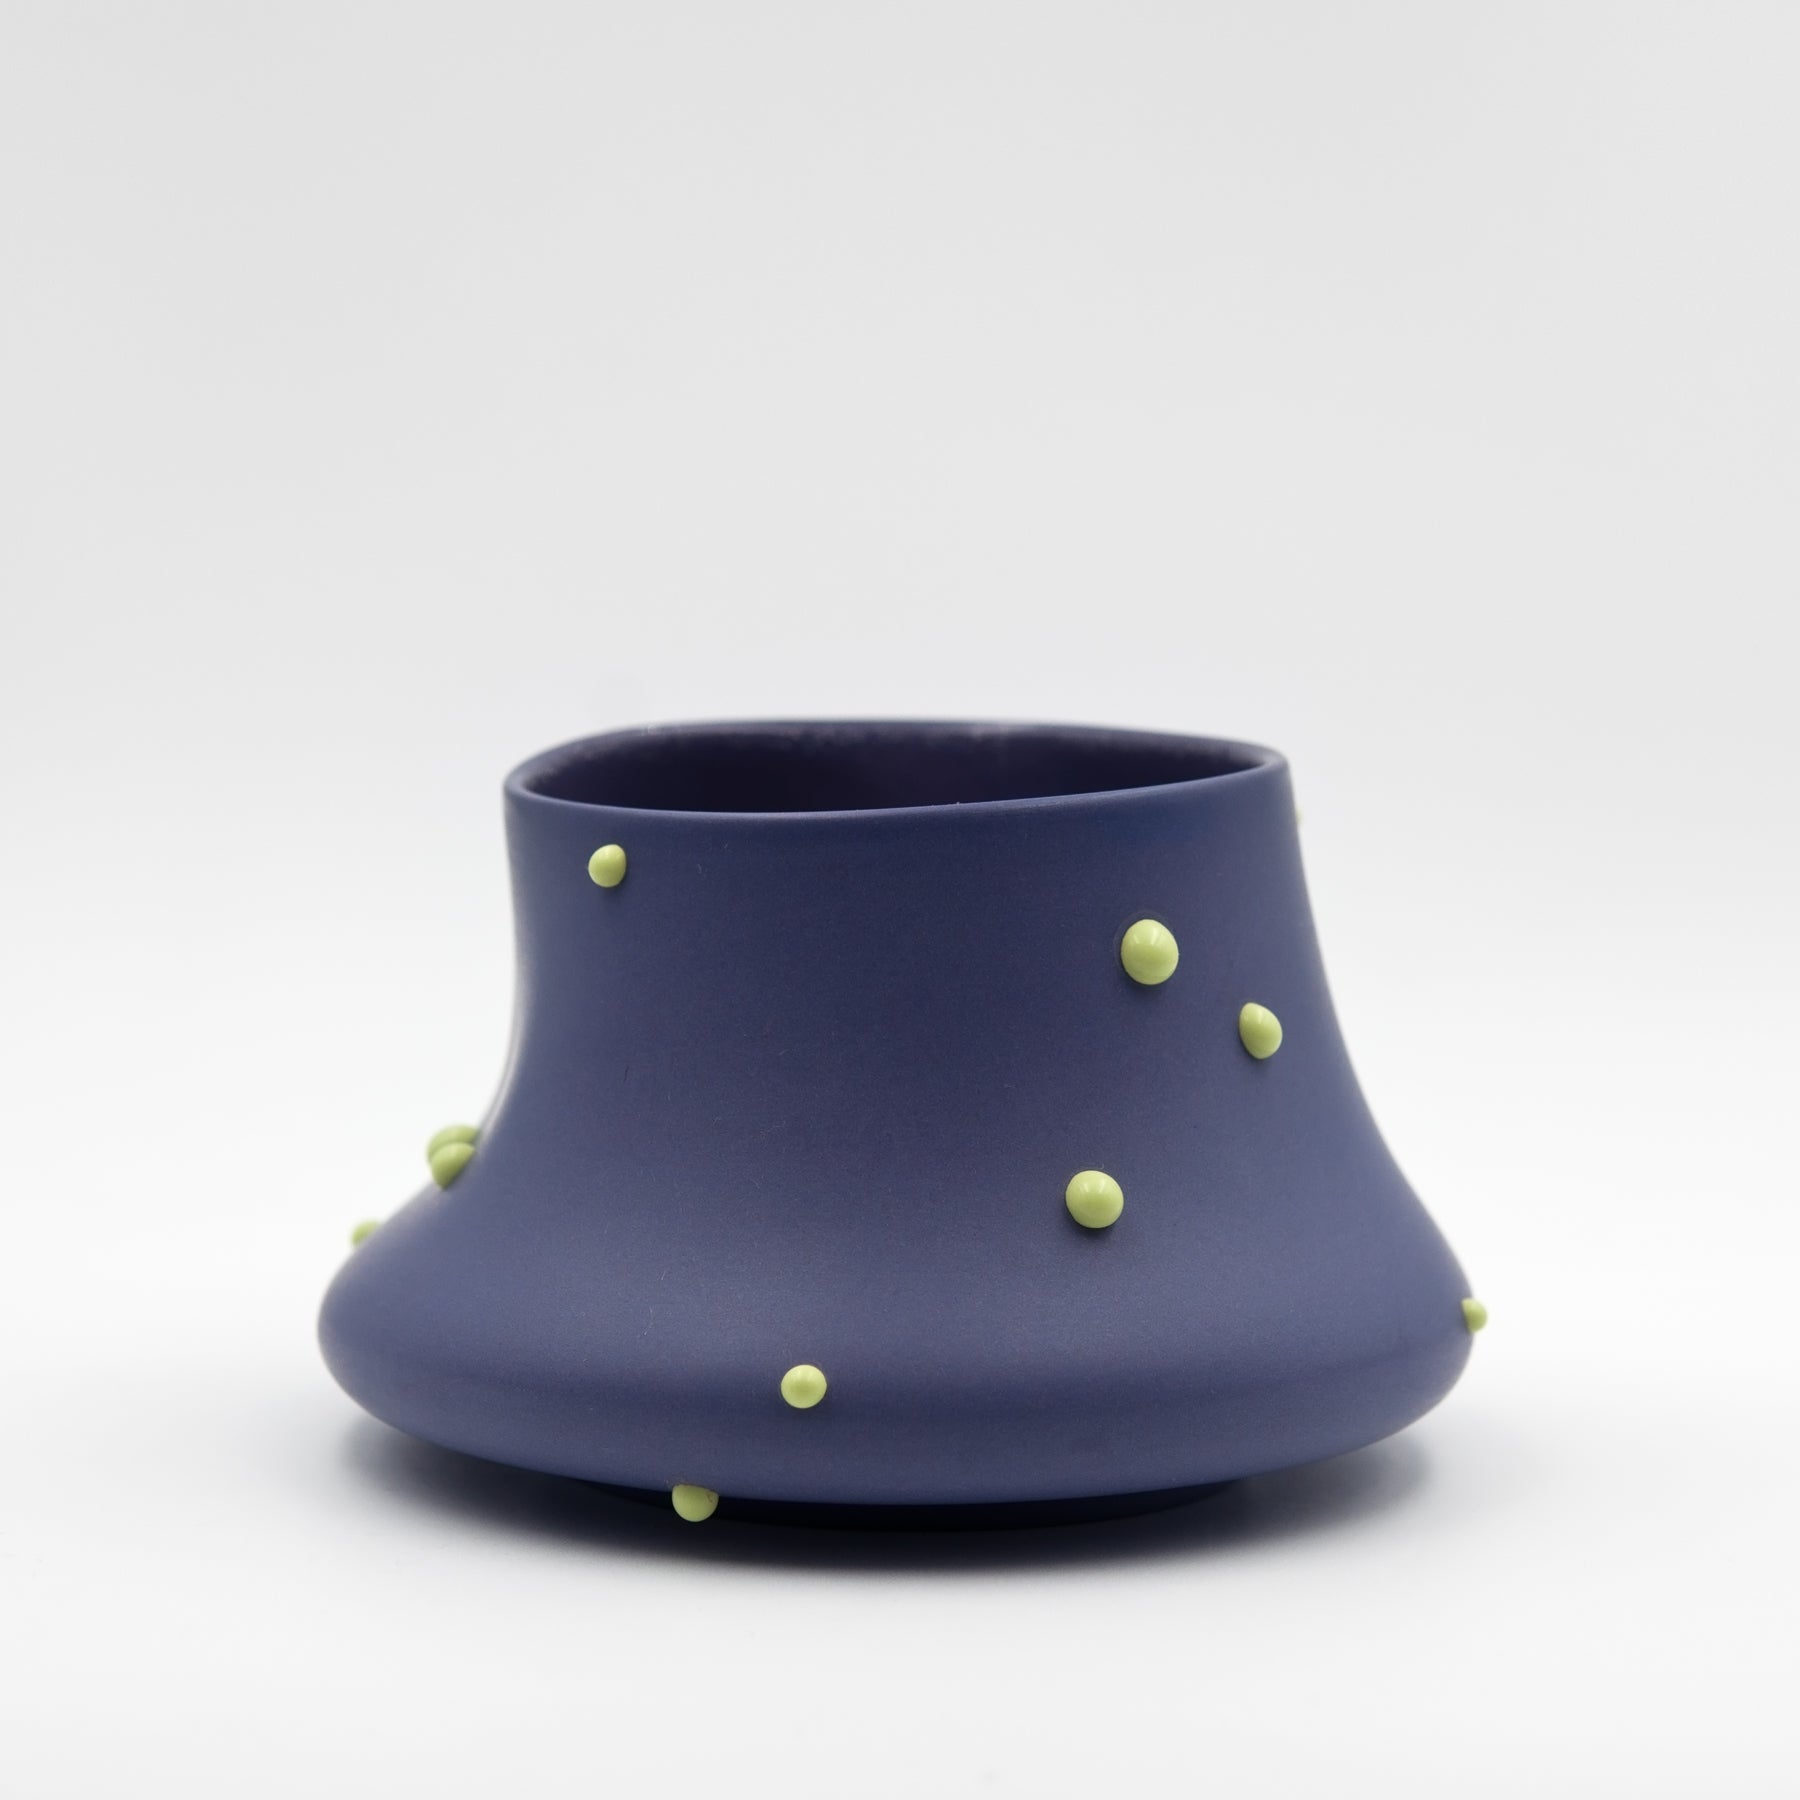 Peckii cup, purple-green